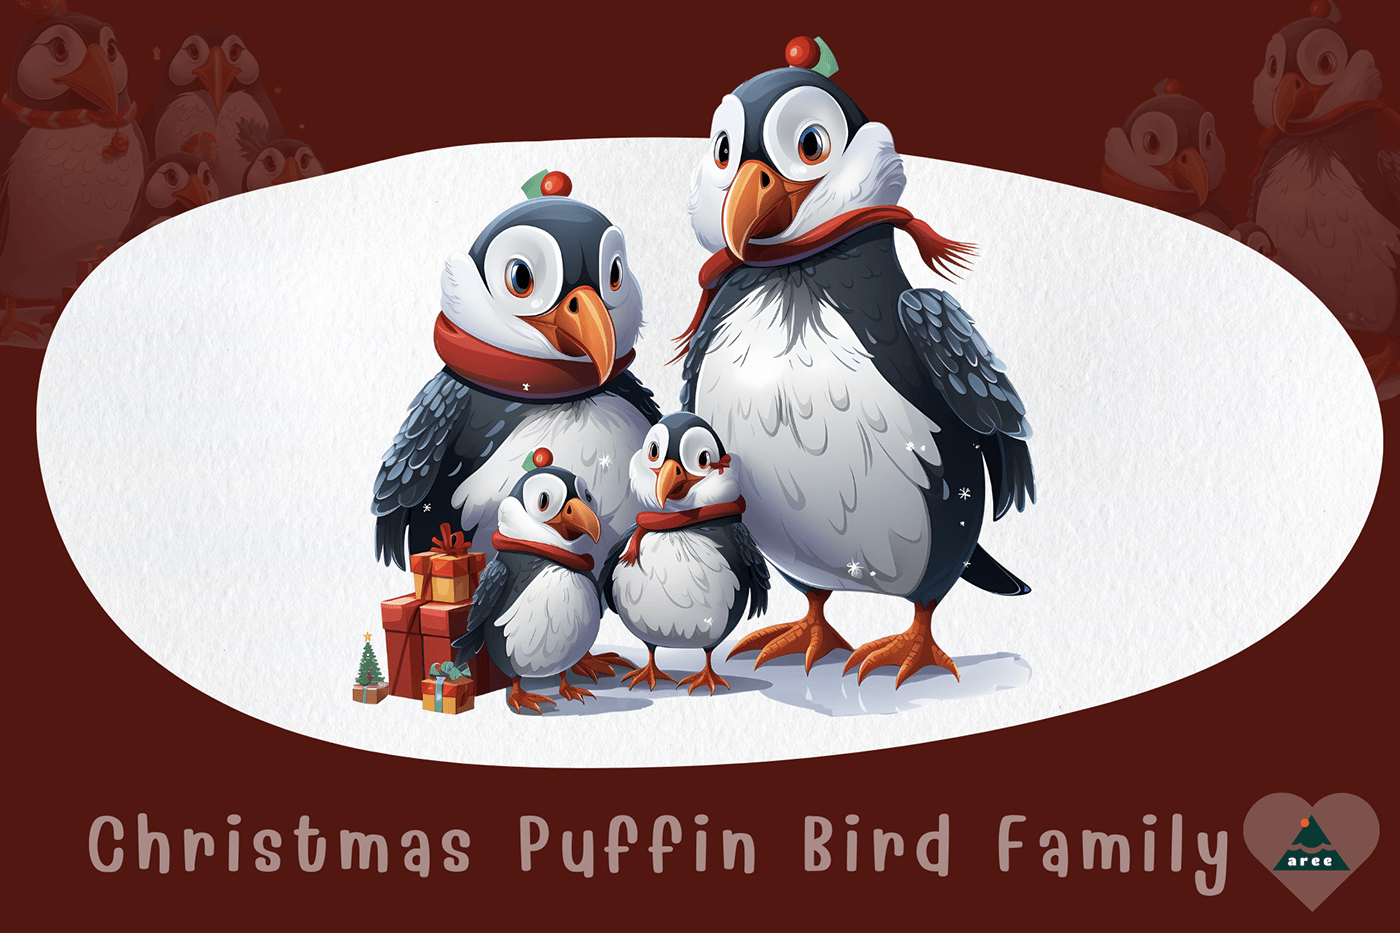 bird Digital Art  artwork puffin Christmas family Character cute animals